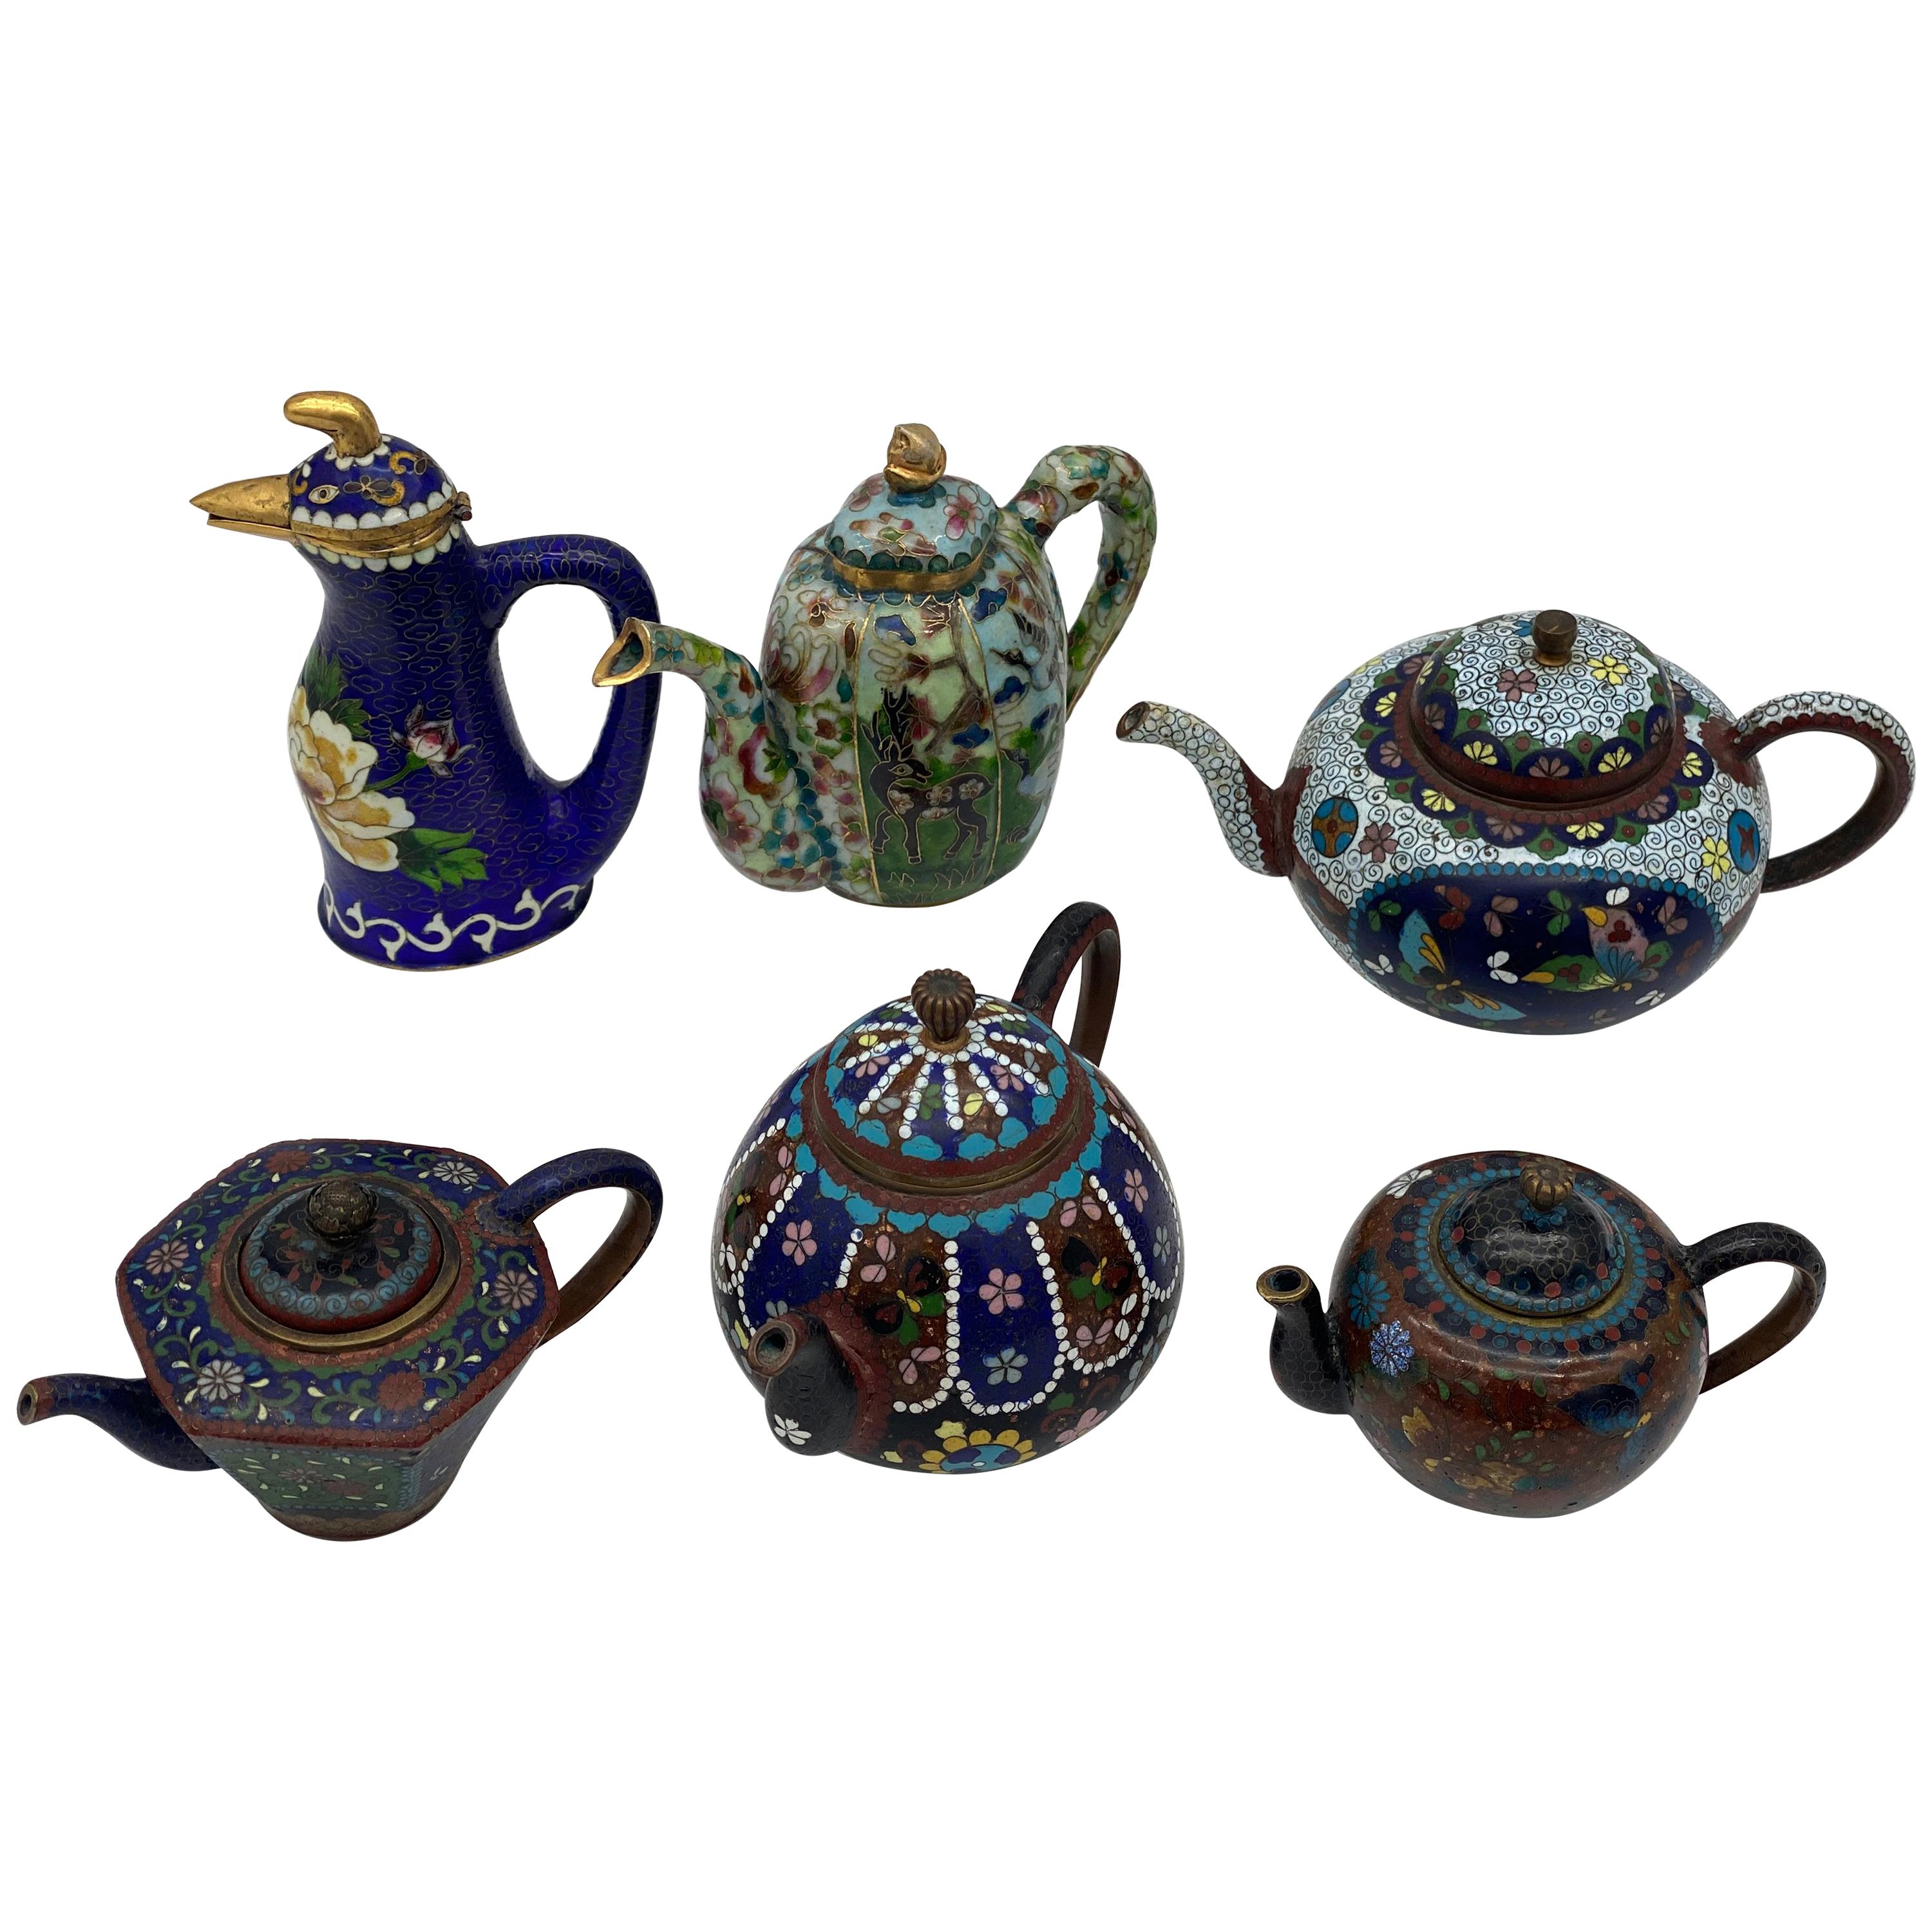 6 Antique Chinese Cloisonne Teapots For Sale